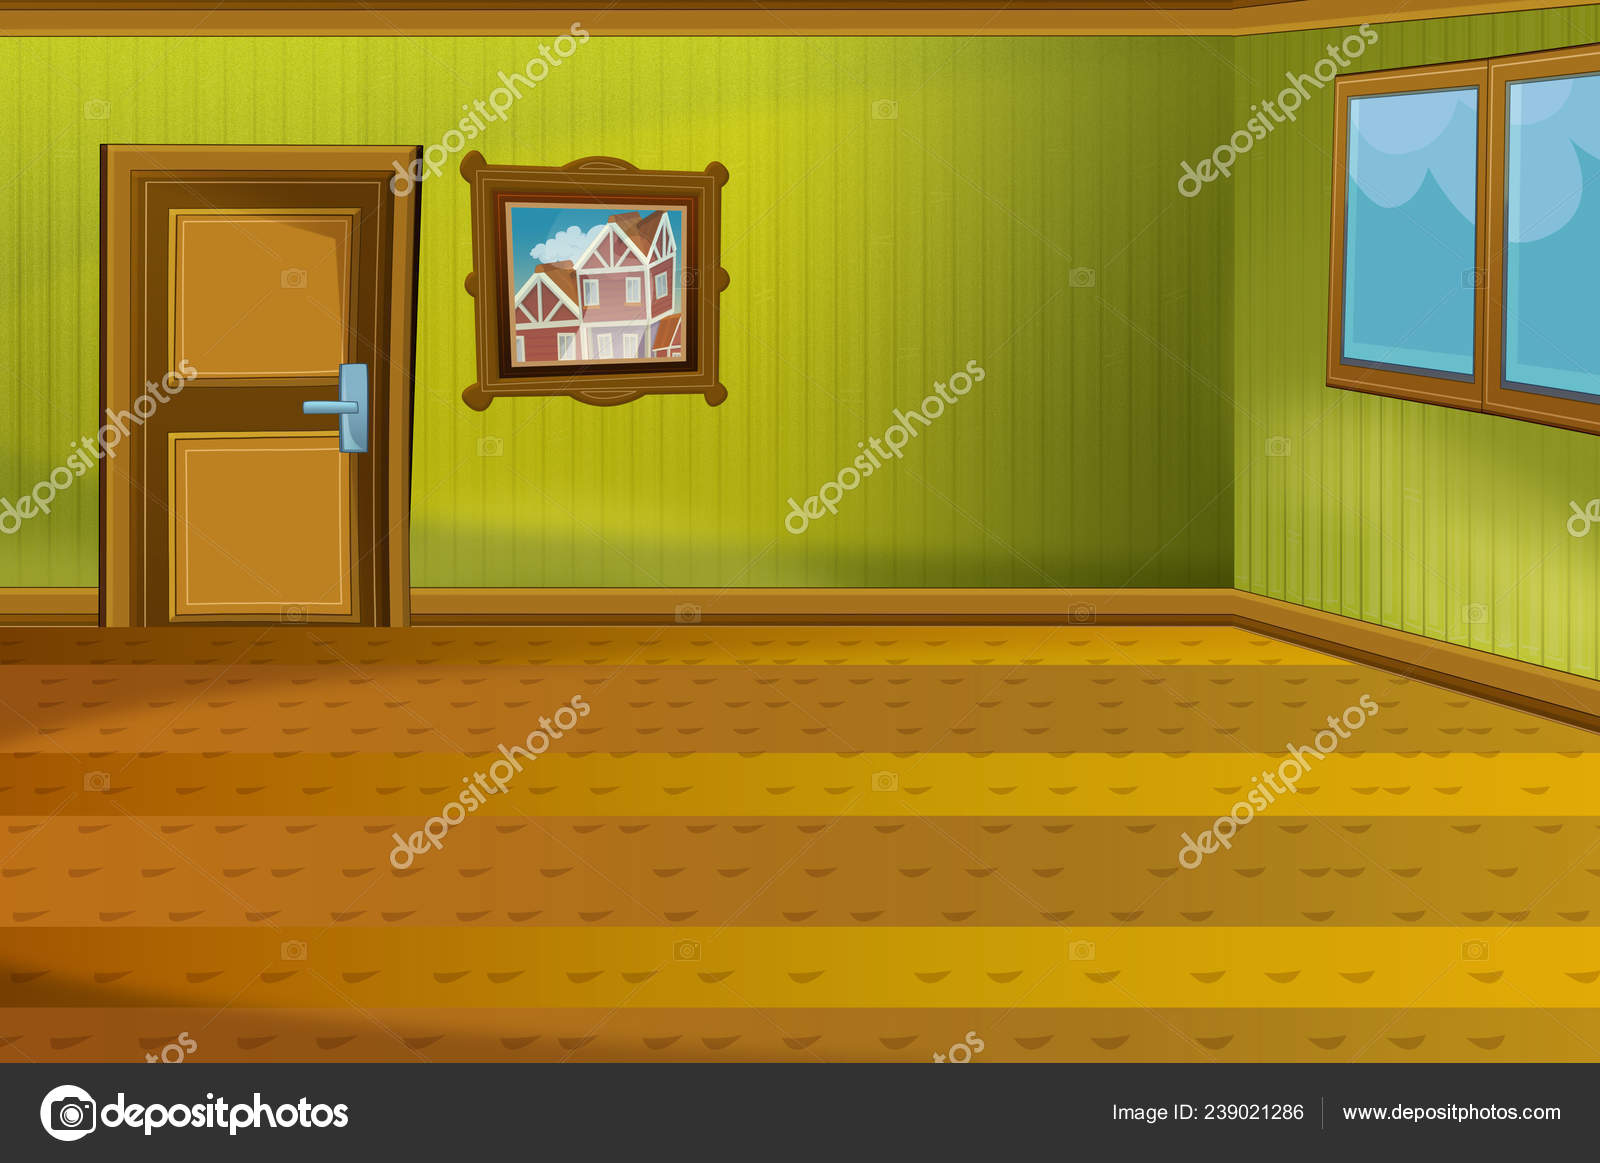 Cartoon Scene House Interior Hall Illustration Children Stock Photo by  ©illustrator_hft 239021286